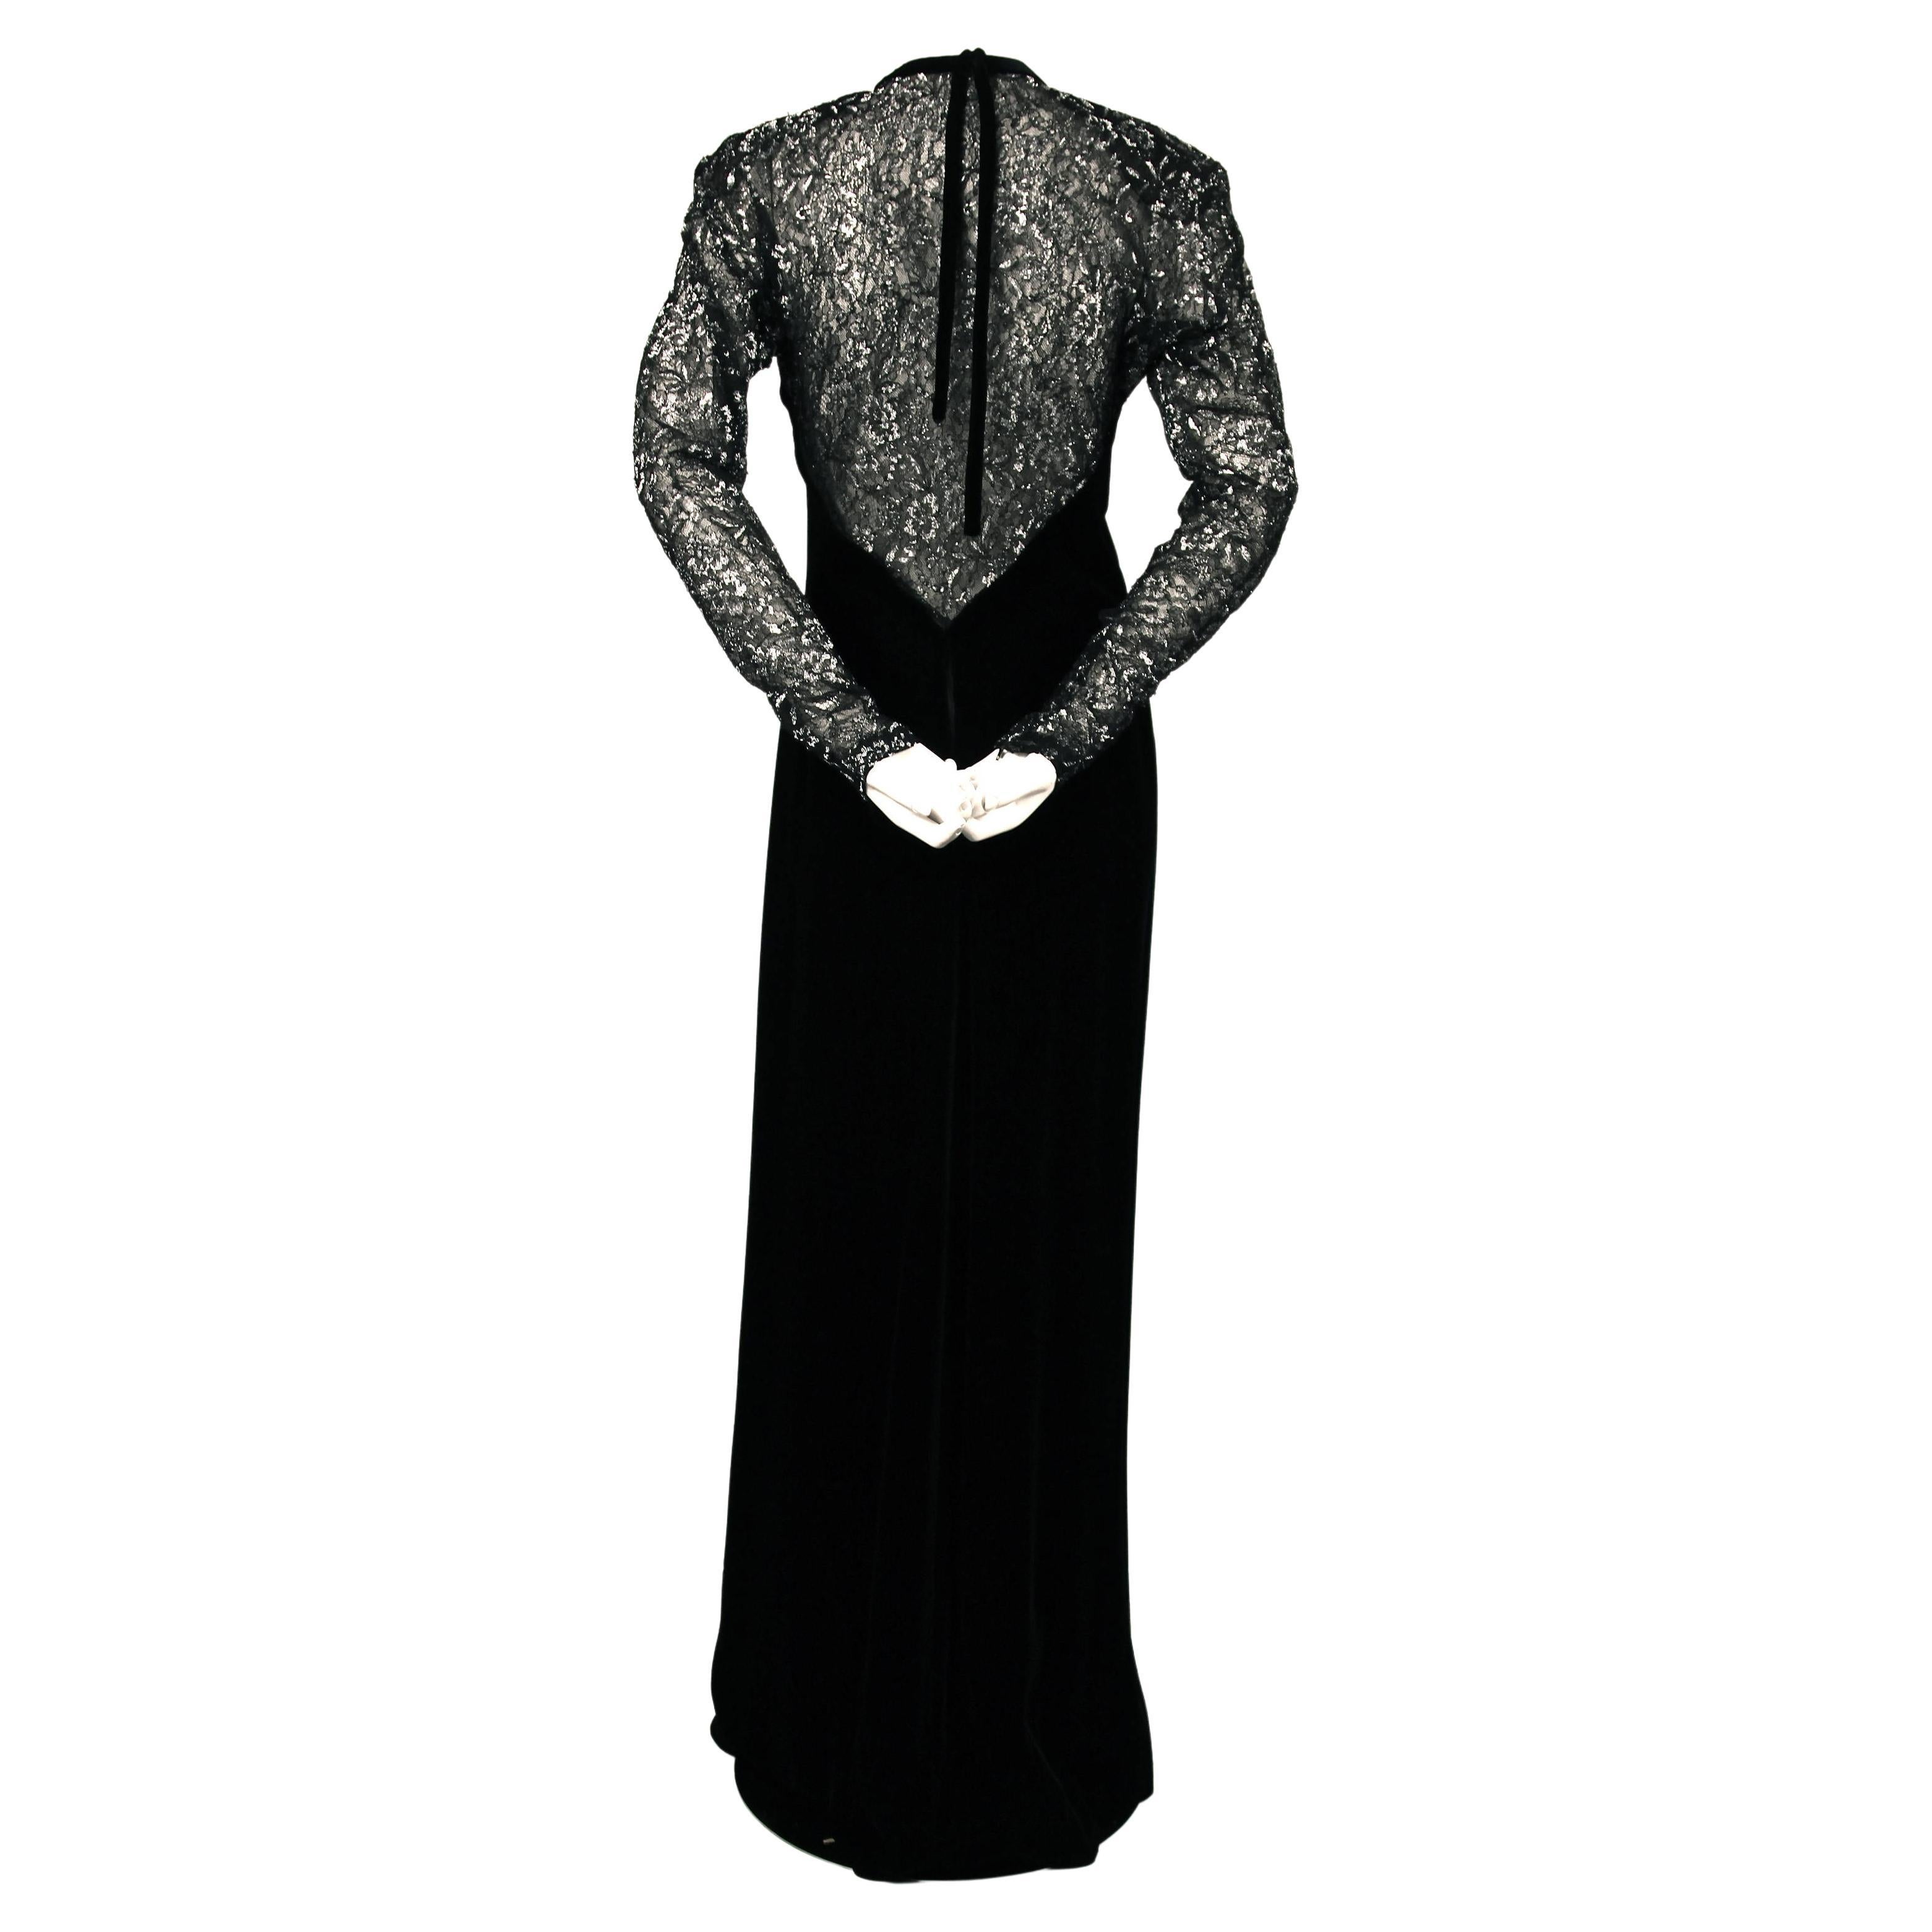 Jacqueline De Ribes black velvet gown with sheer lace panels For Sale 1